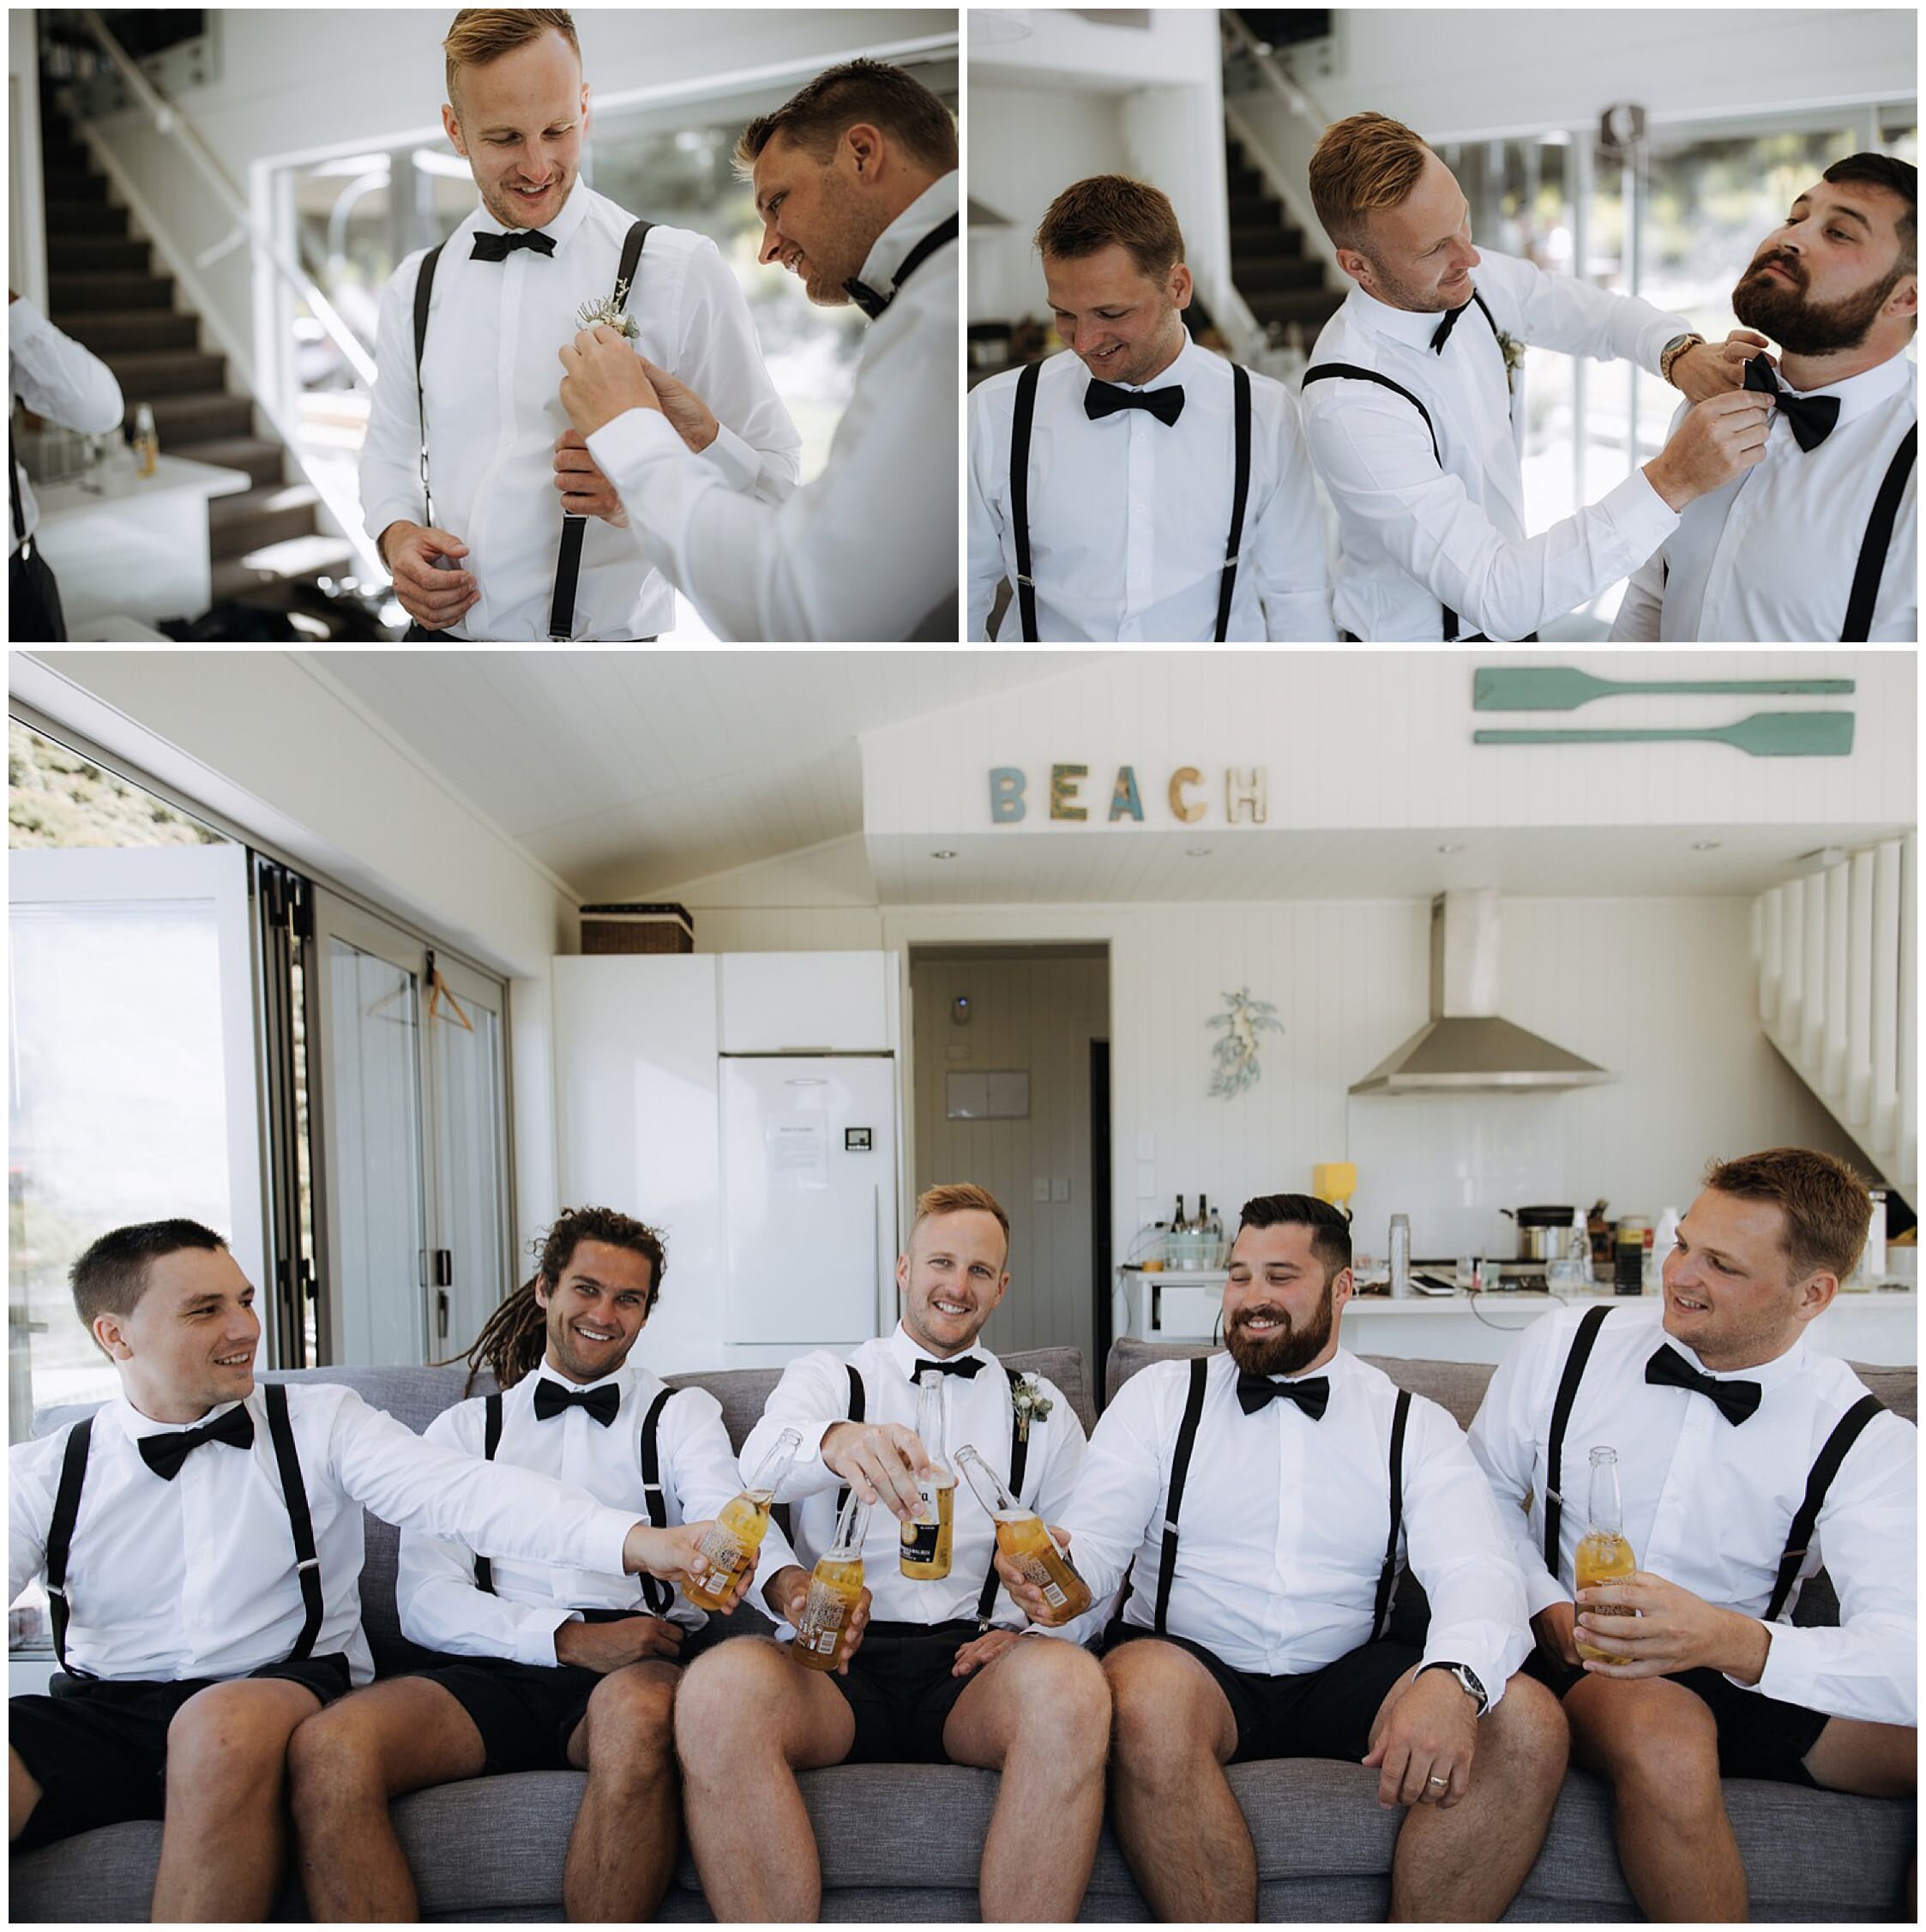 Zanda+Auckland+wedding+photographer+boho+retro+suspenders+groom+denim+jacket+bride+Te+Whai+Bay+Wines+venue+bright+glass+house+vineyard+photoshoot+New+Zealand_9.jpeg